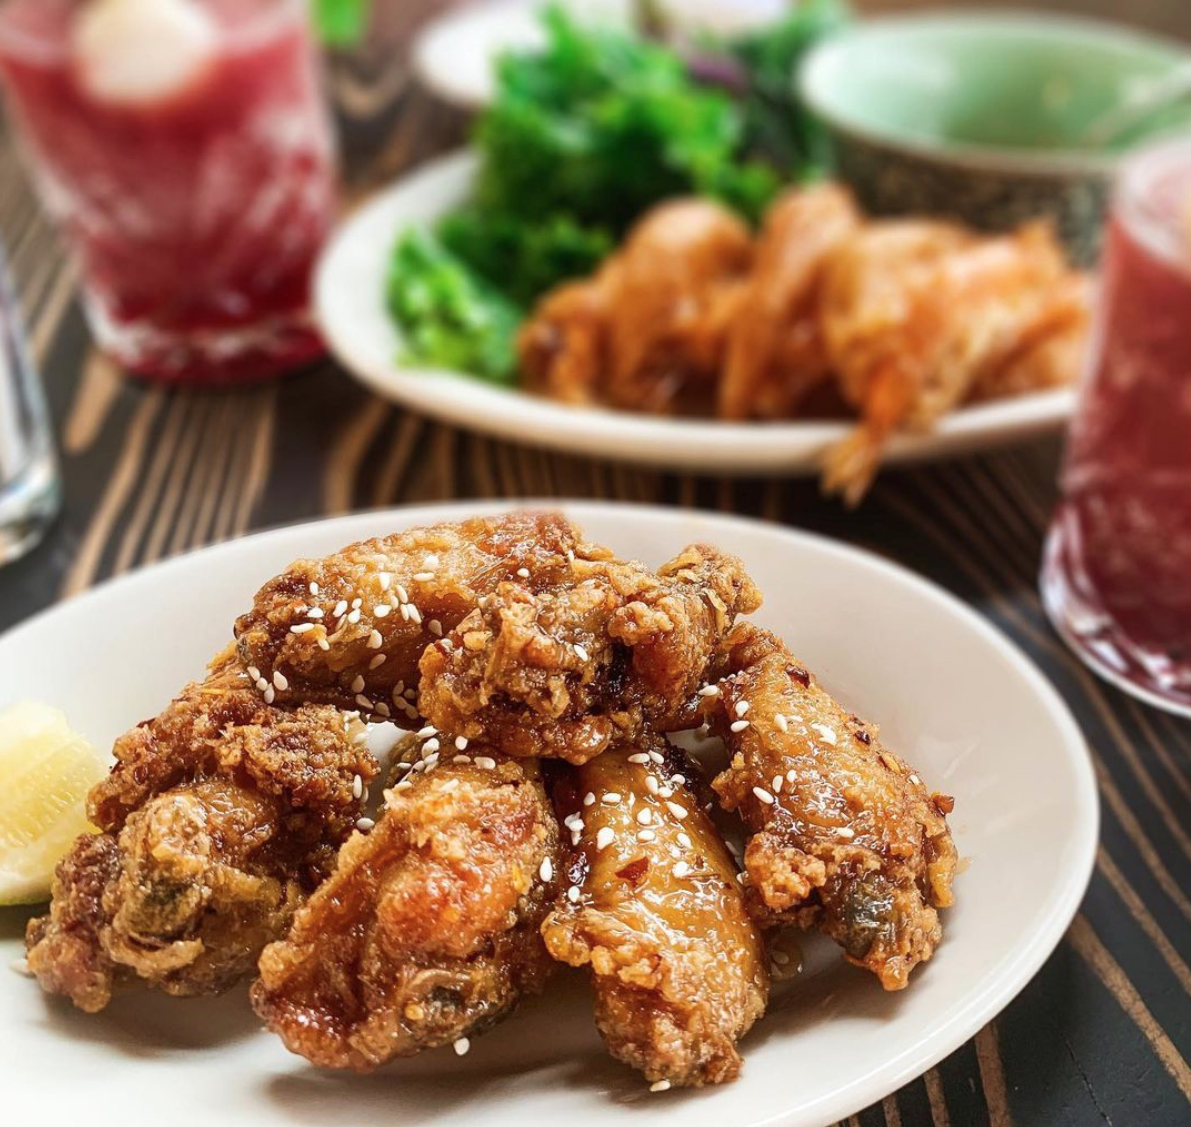 A plate of sticky glazed chicken wings.